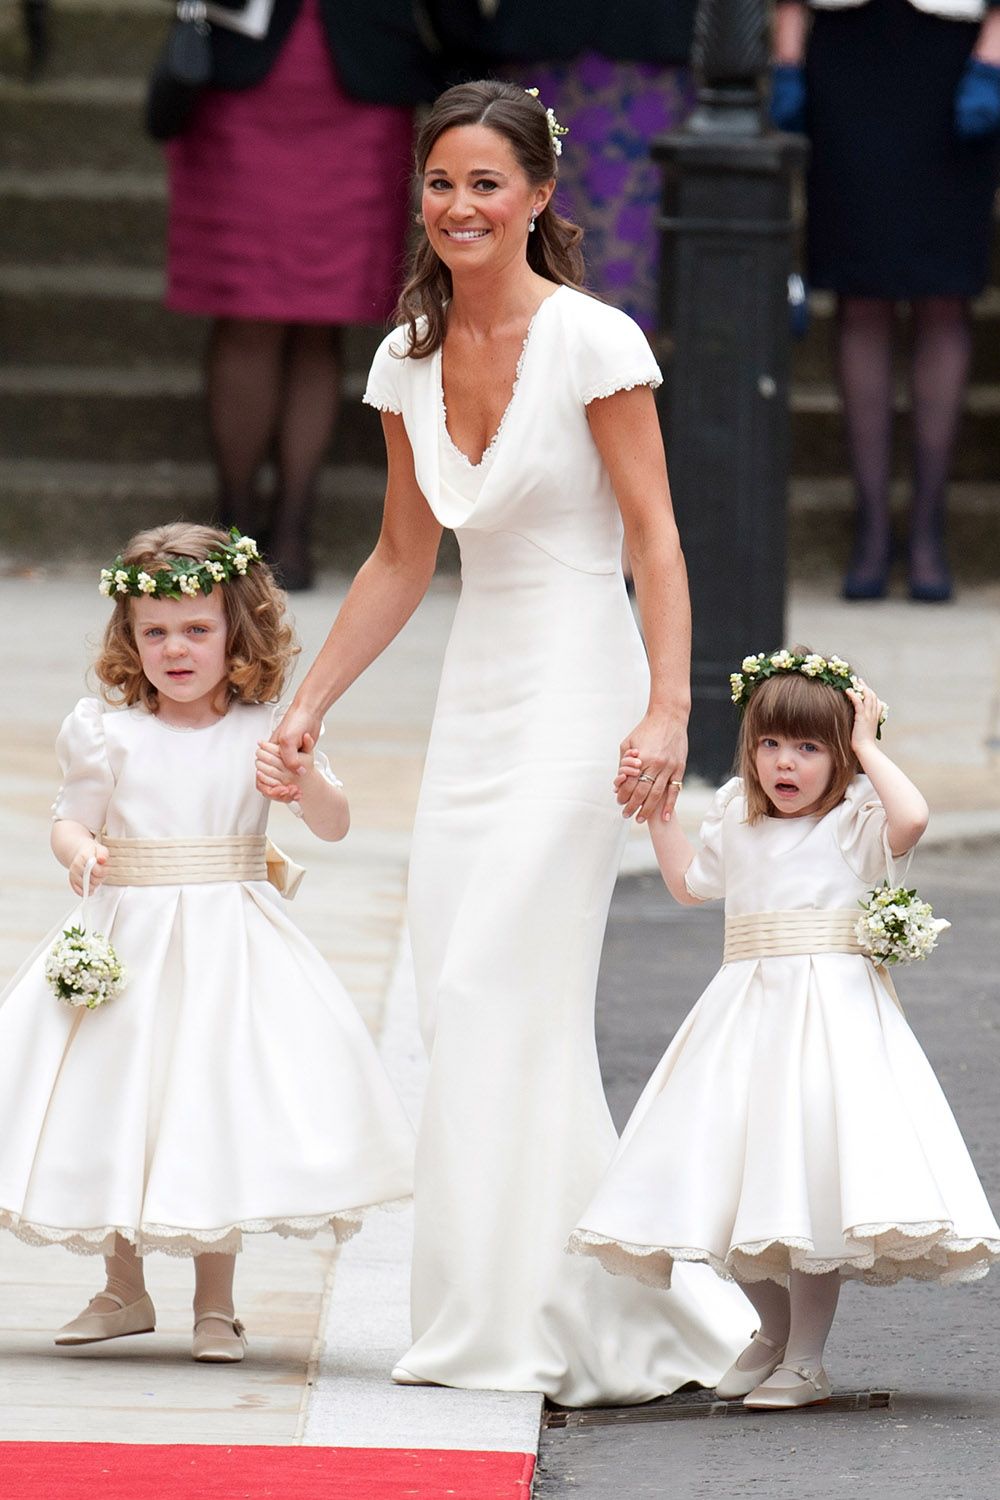 Ydmyg boksning kuffert Kate Middleton and Prince William Wedding Photos - Royal Wedding 2011  Pictures